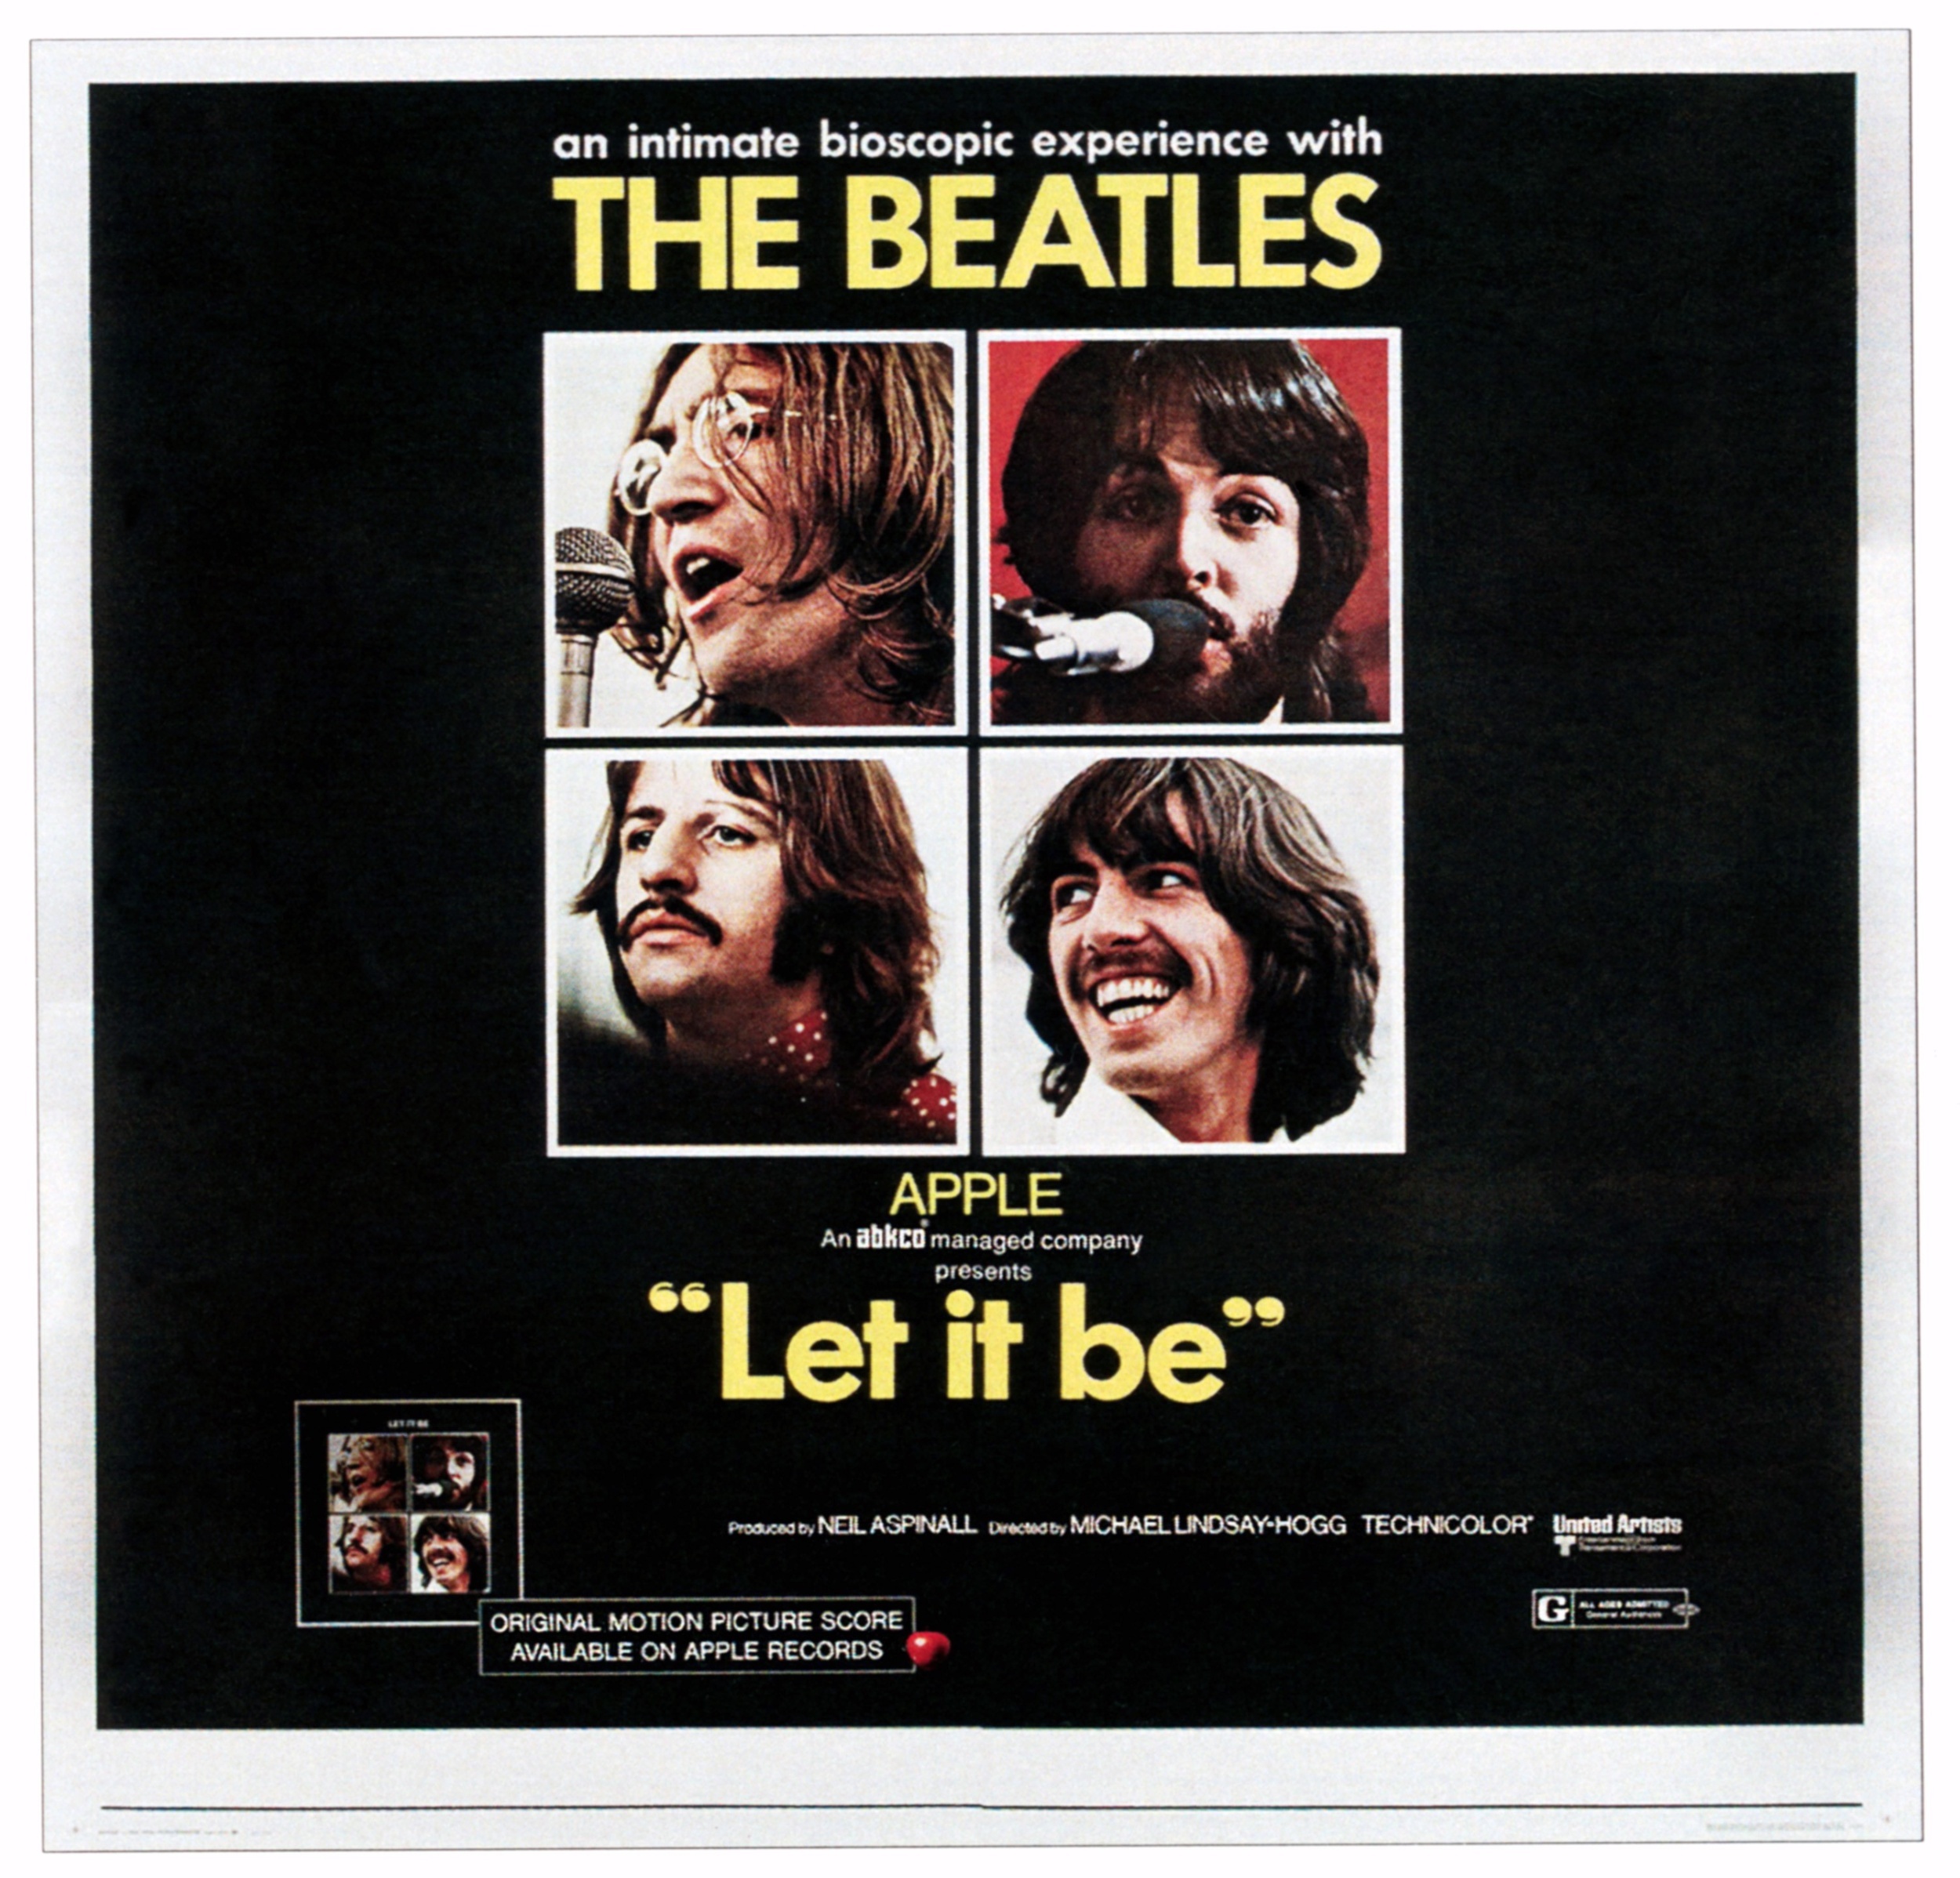 Песня лет ит би. The Beatles Let it be обложка альбома. The Beatles Let it be 1970 обложка. The Beatles Let it be обложка. Постер the Beatles - Let it be (1970).